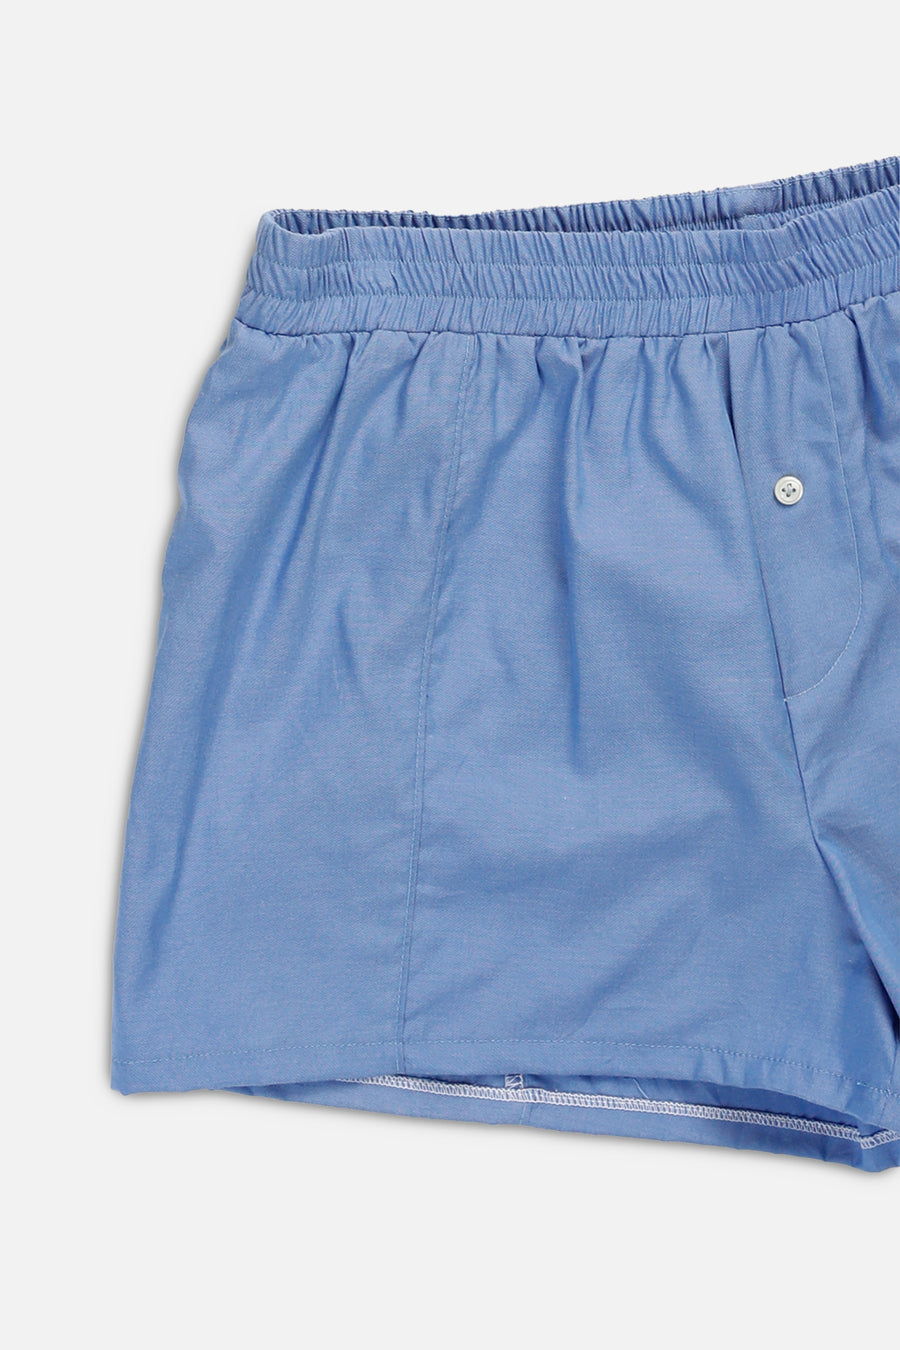 Rework Oxford Mini Boxer Shorts - XS, S, M, L, XL